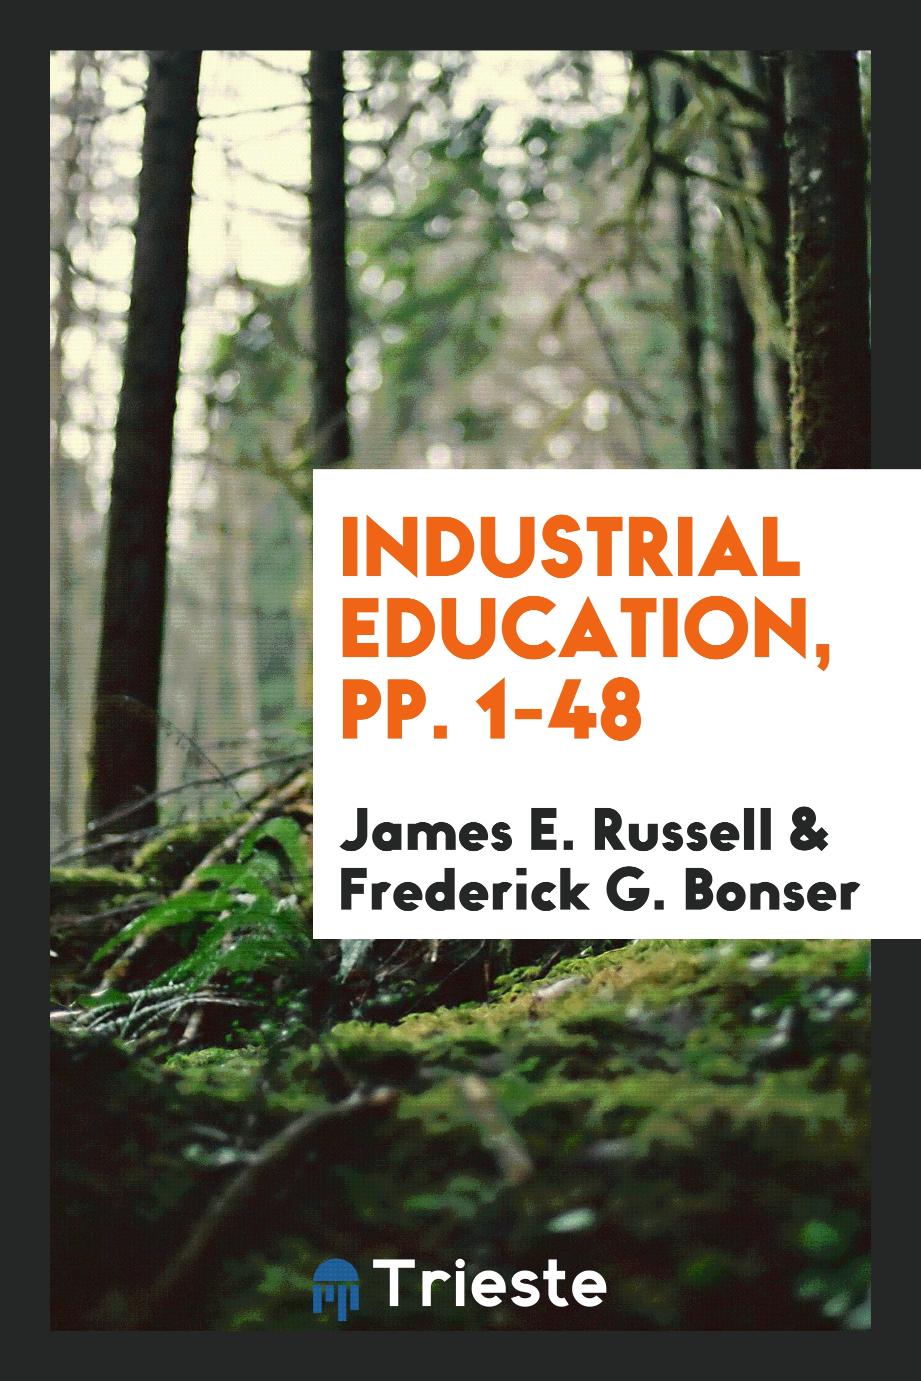 Industrial Education, pp. 1-48